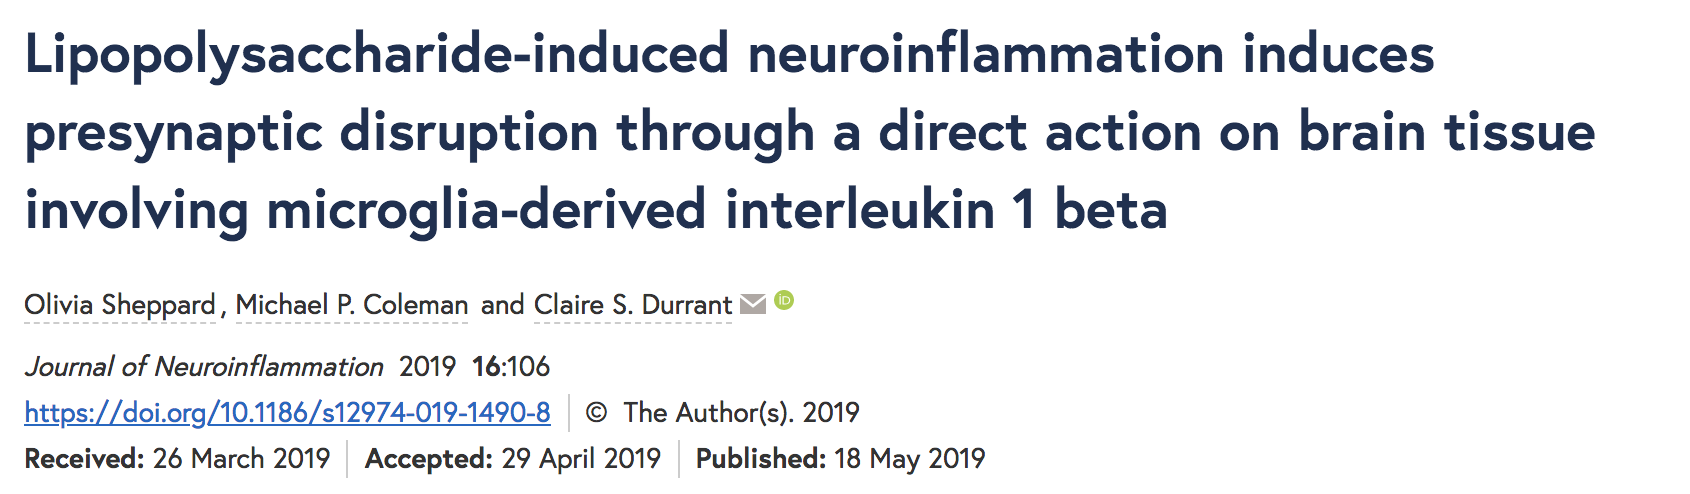 Journal of Neuroinflammation Publication 